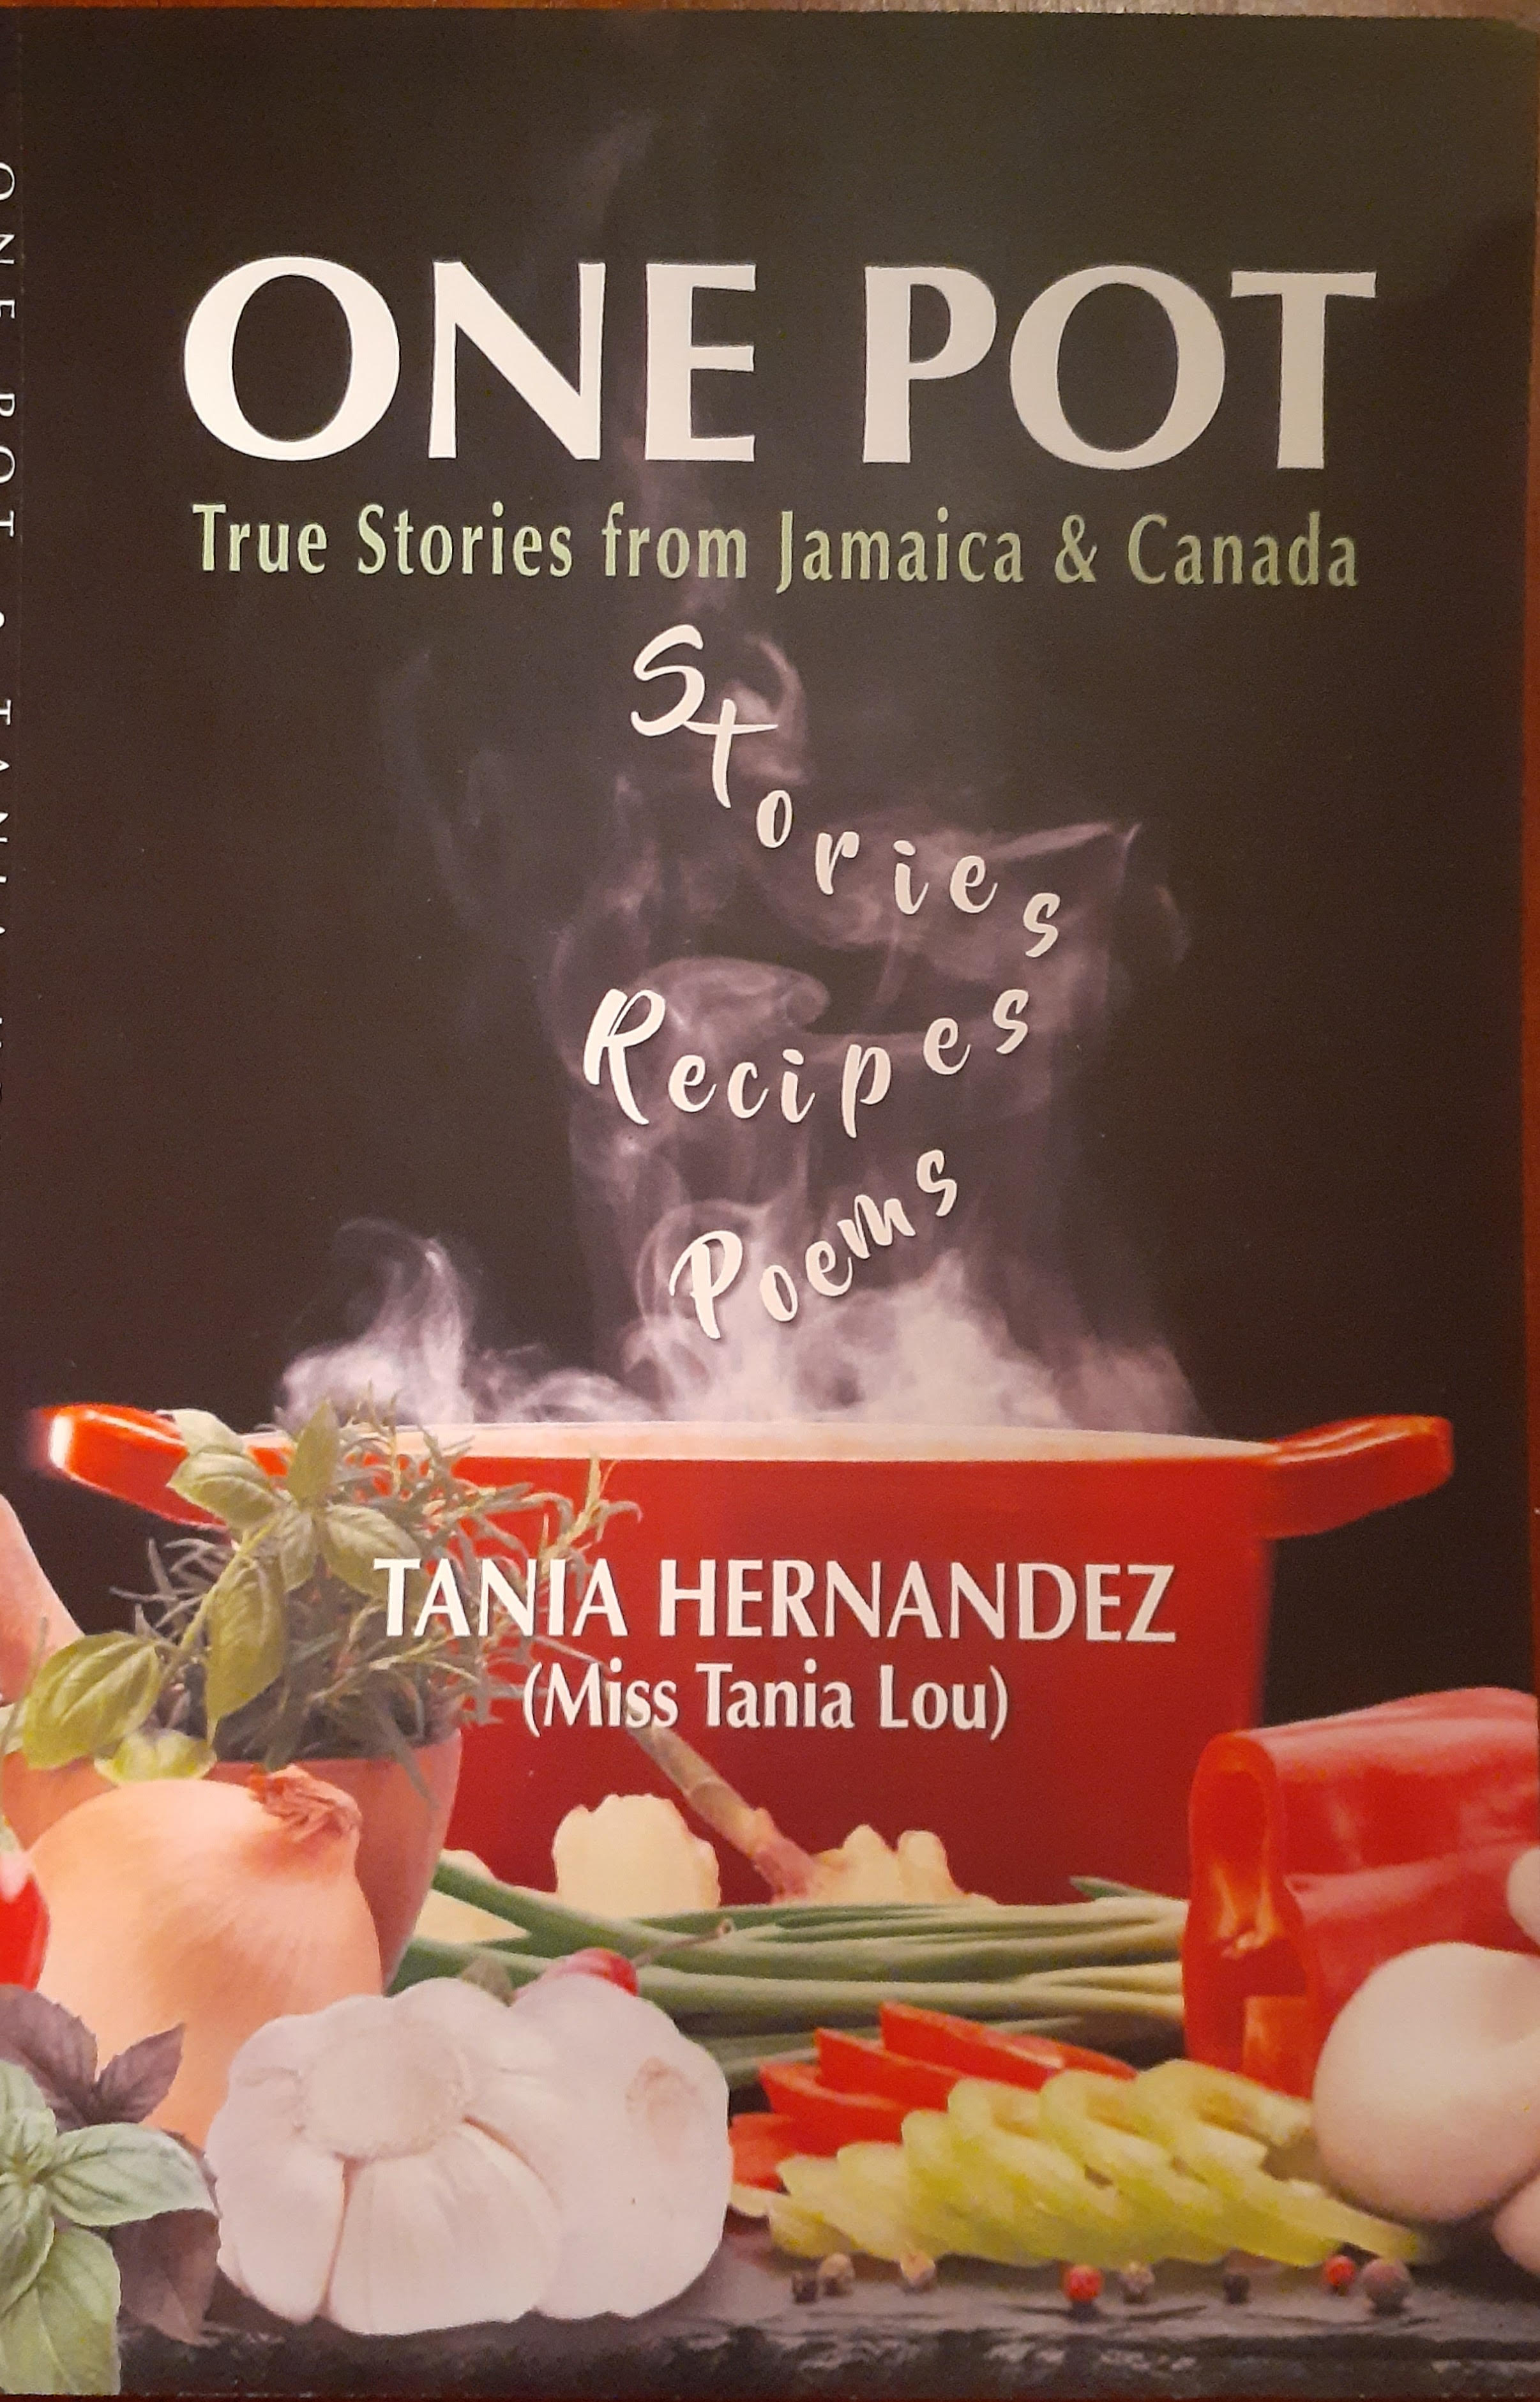 tania_hernandez - on pot book